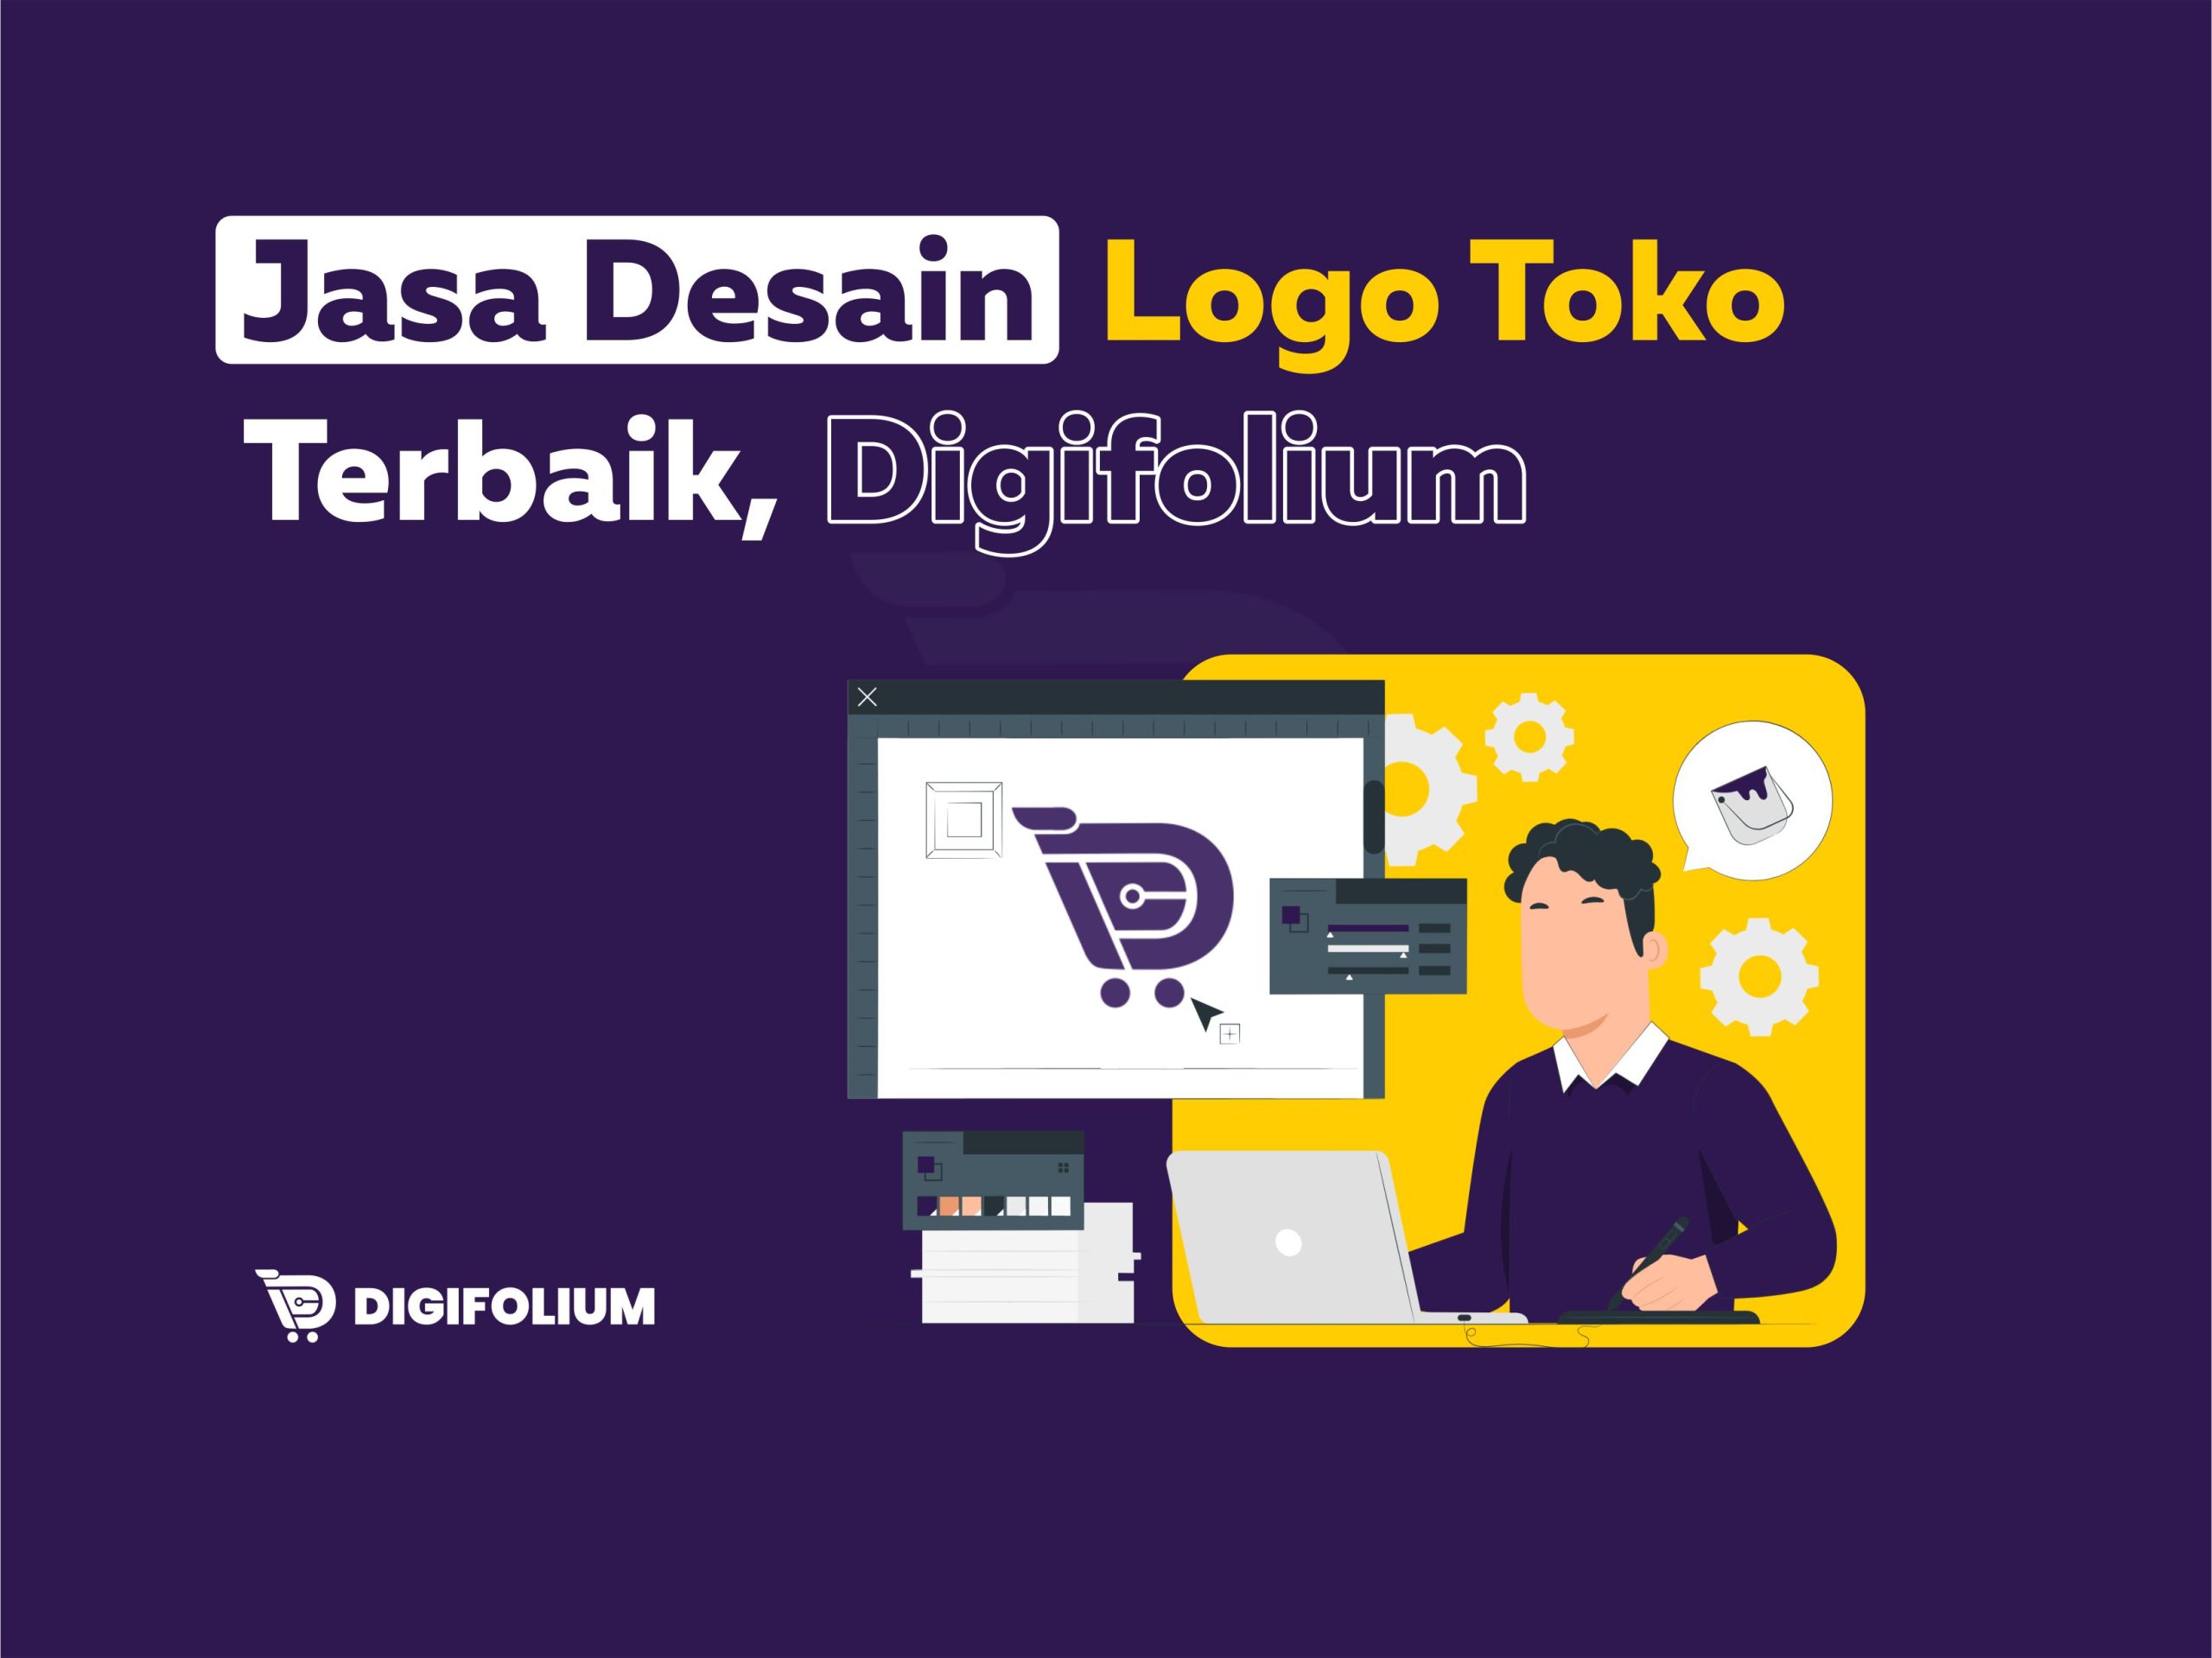 Jasa Desain Logo Toko Terbaik, Digifolium